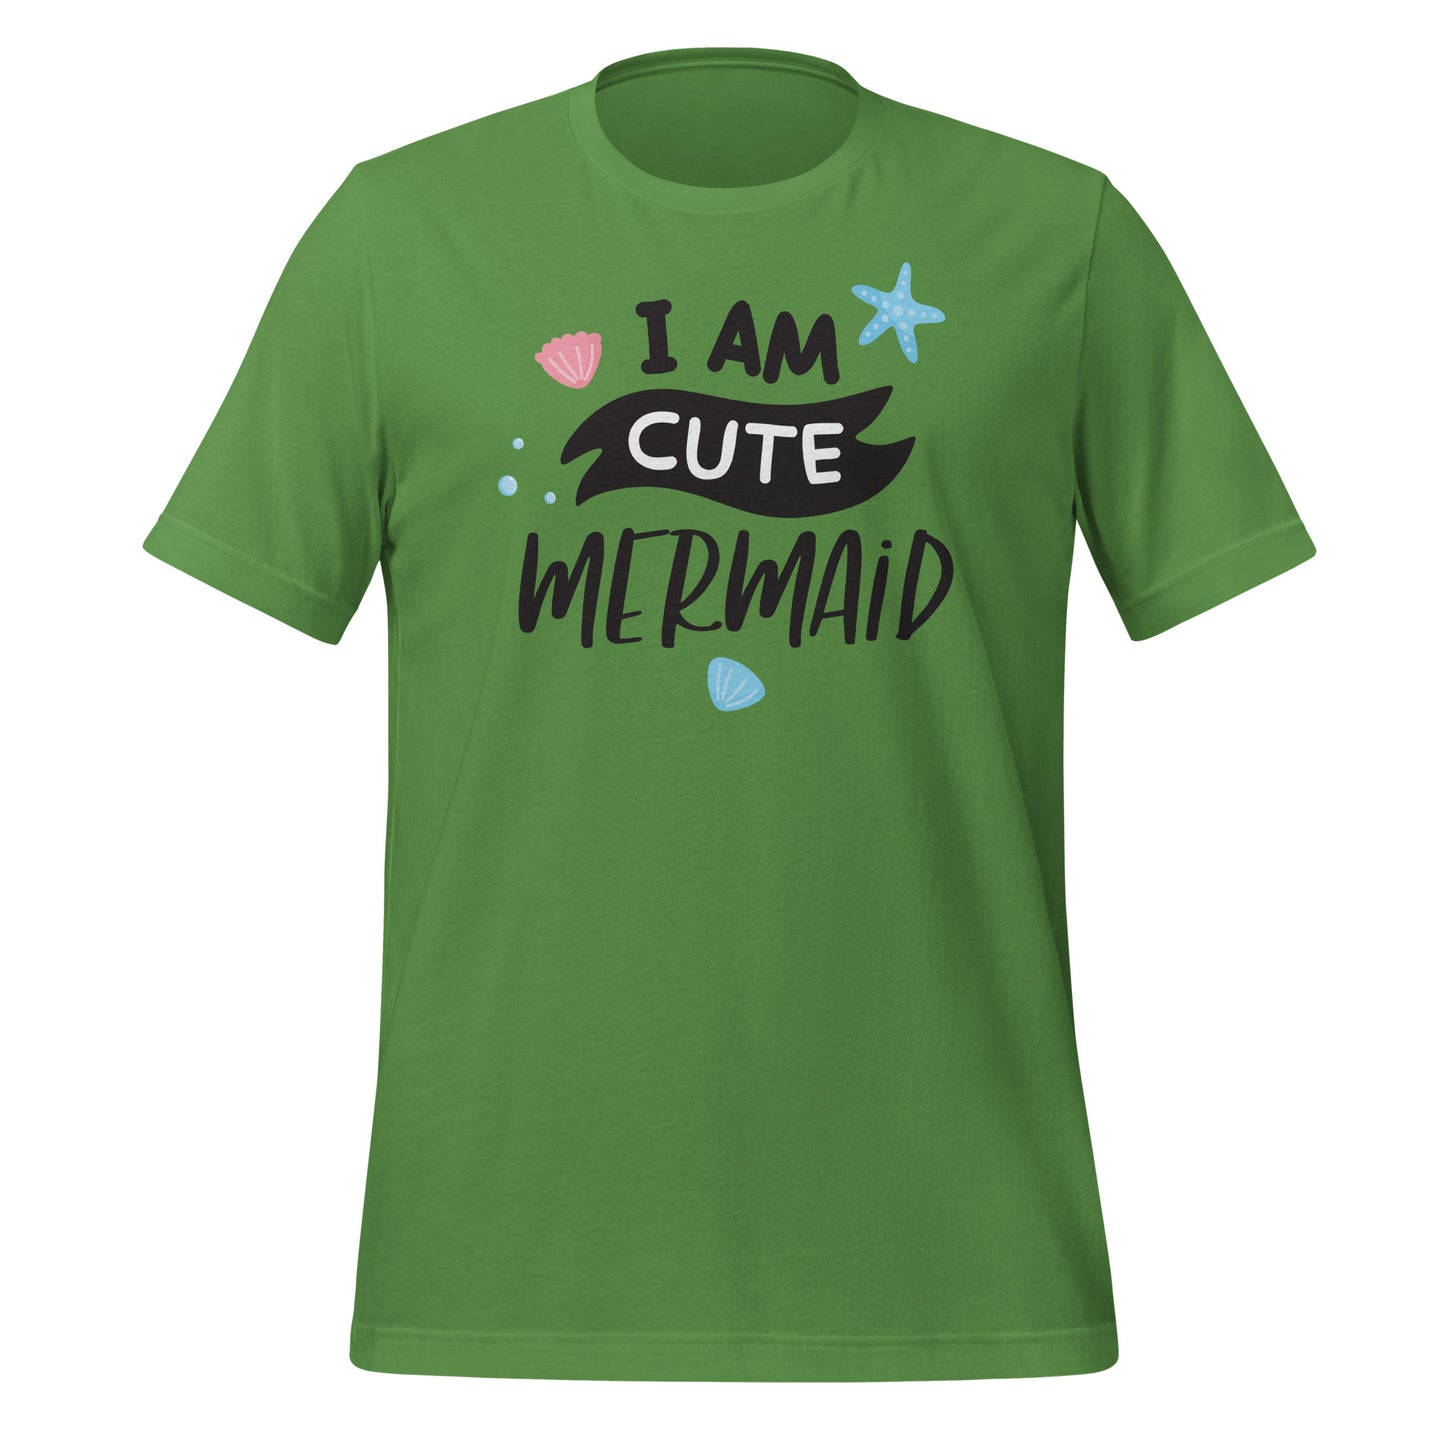 I am Cute Mermaid T-Shirt for Mermaid Lovers!